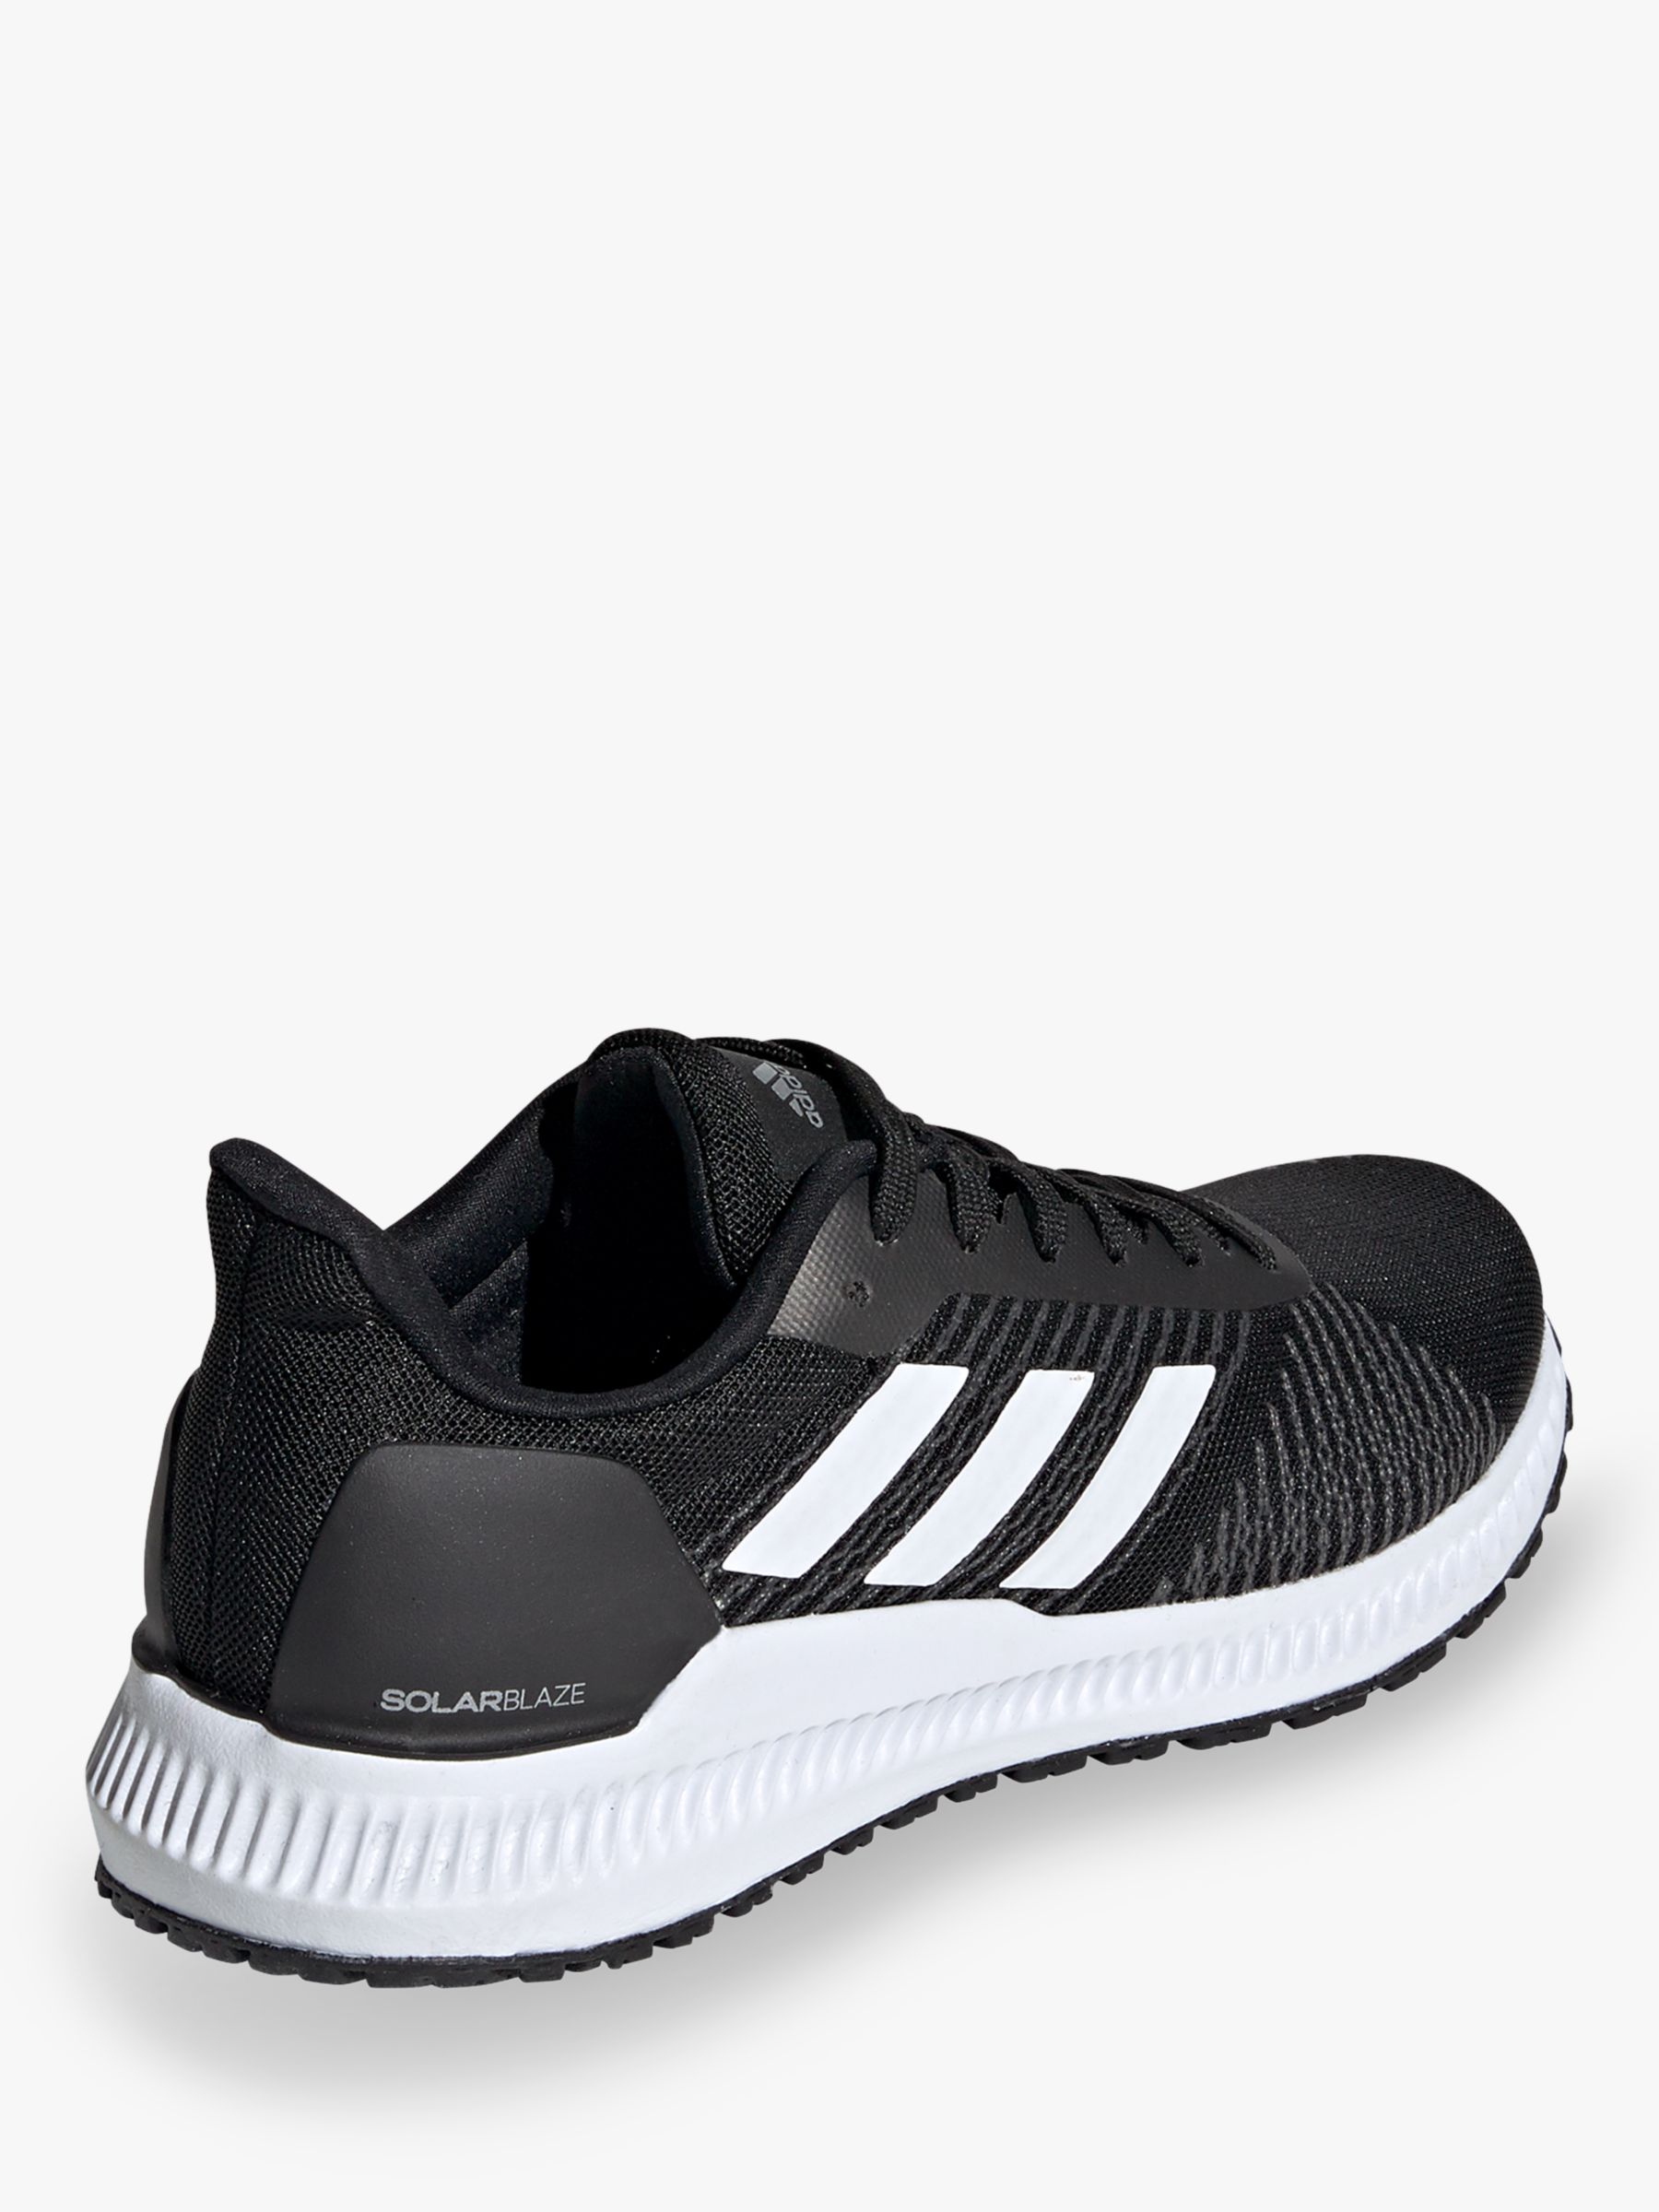 adidas solar blaze running shoes womens